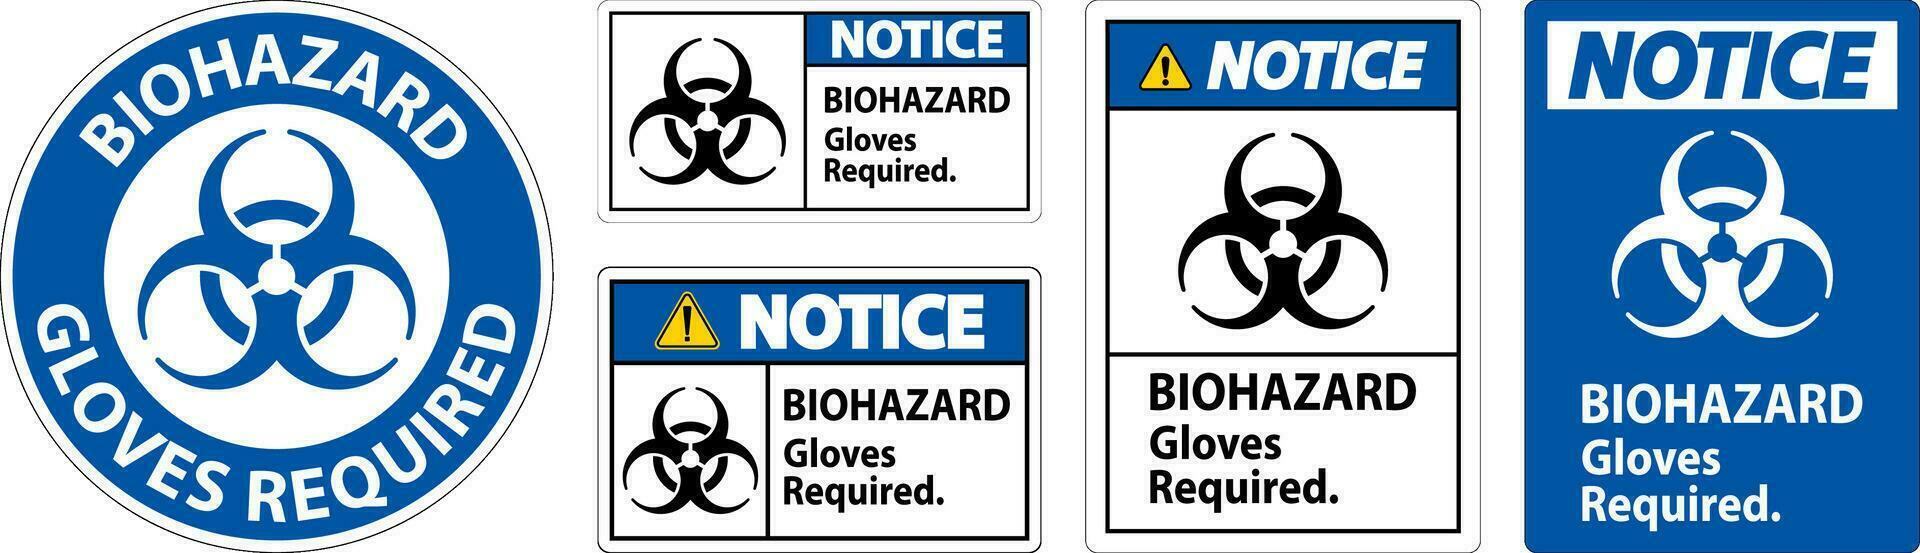 Biohazard Notice Label Biohazard Gloves Required vector